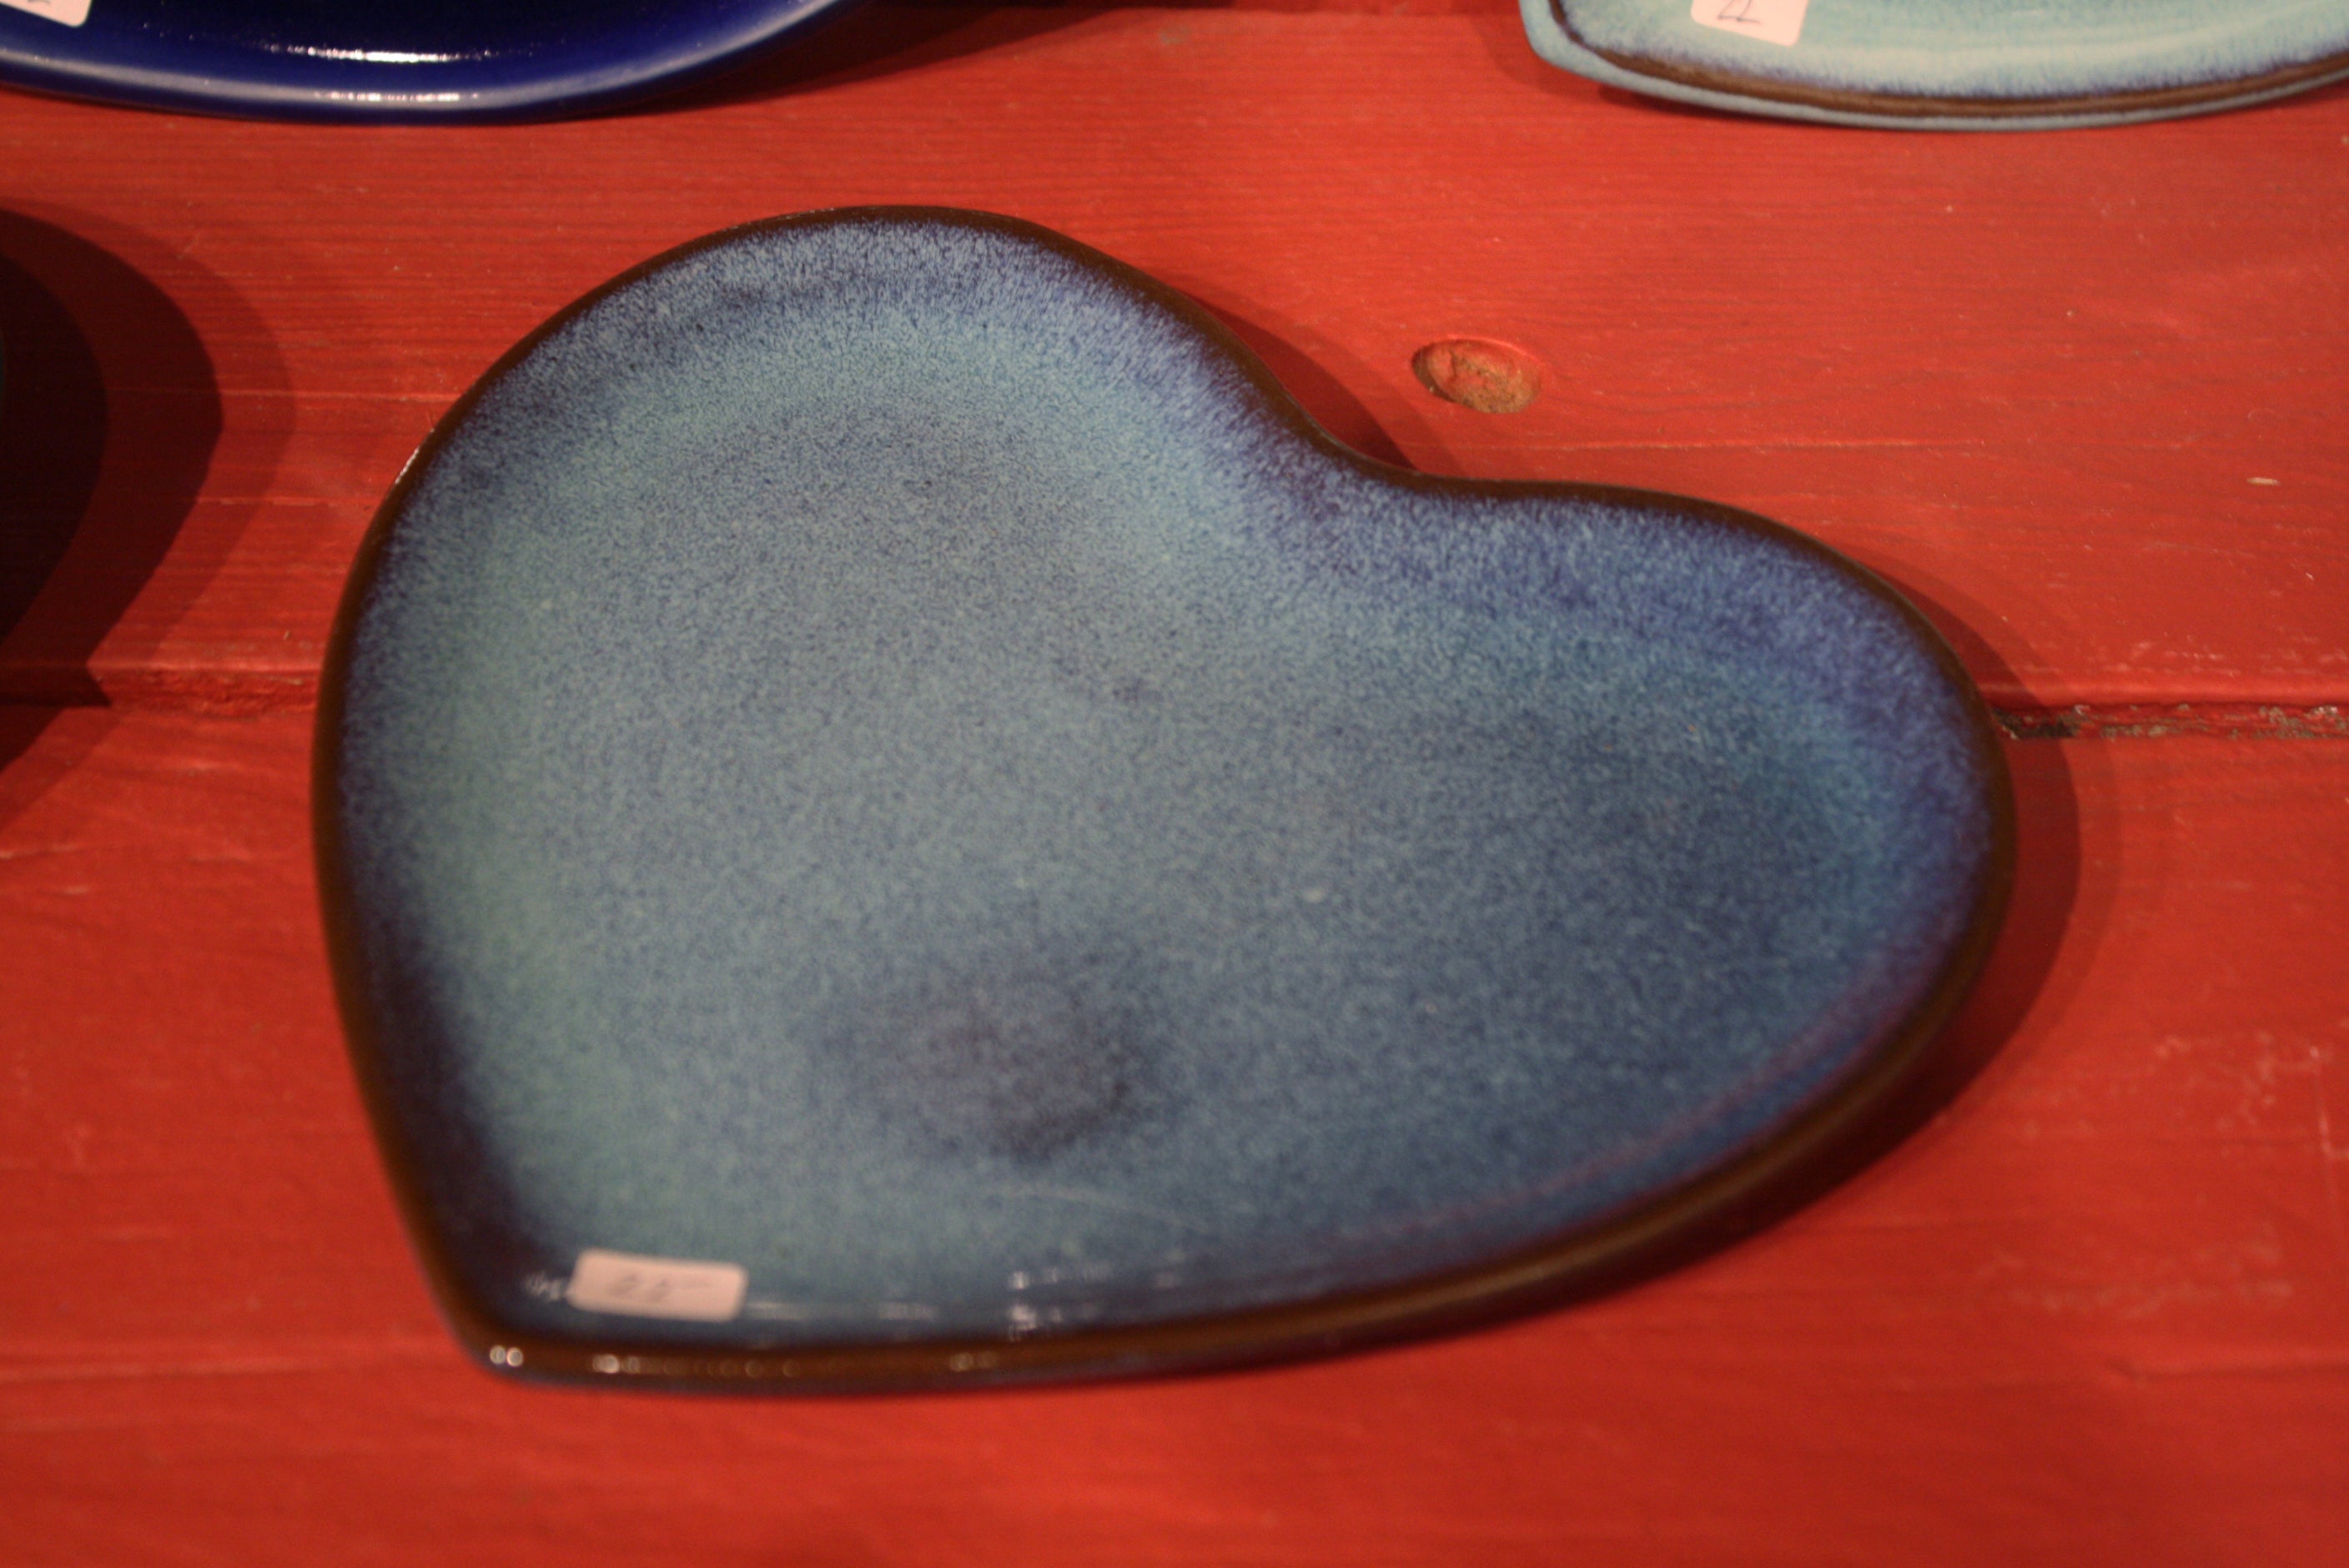 Heart shaped plate at Greenbridge Pottery Studio